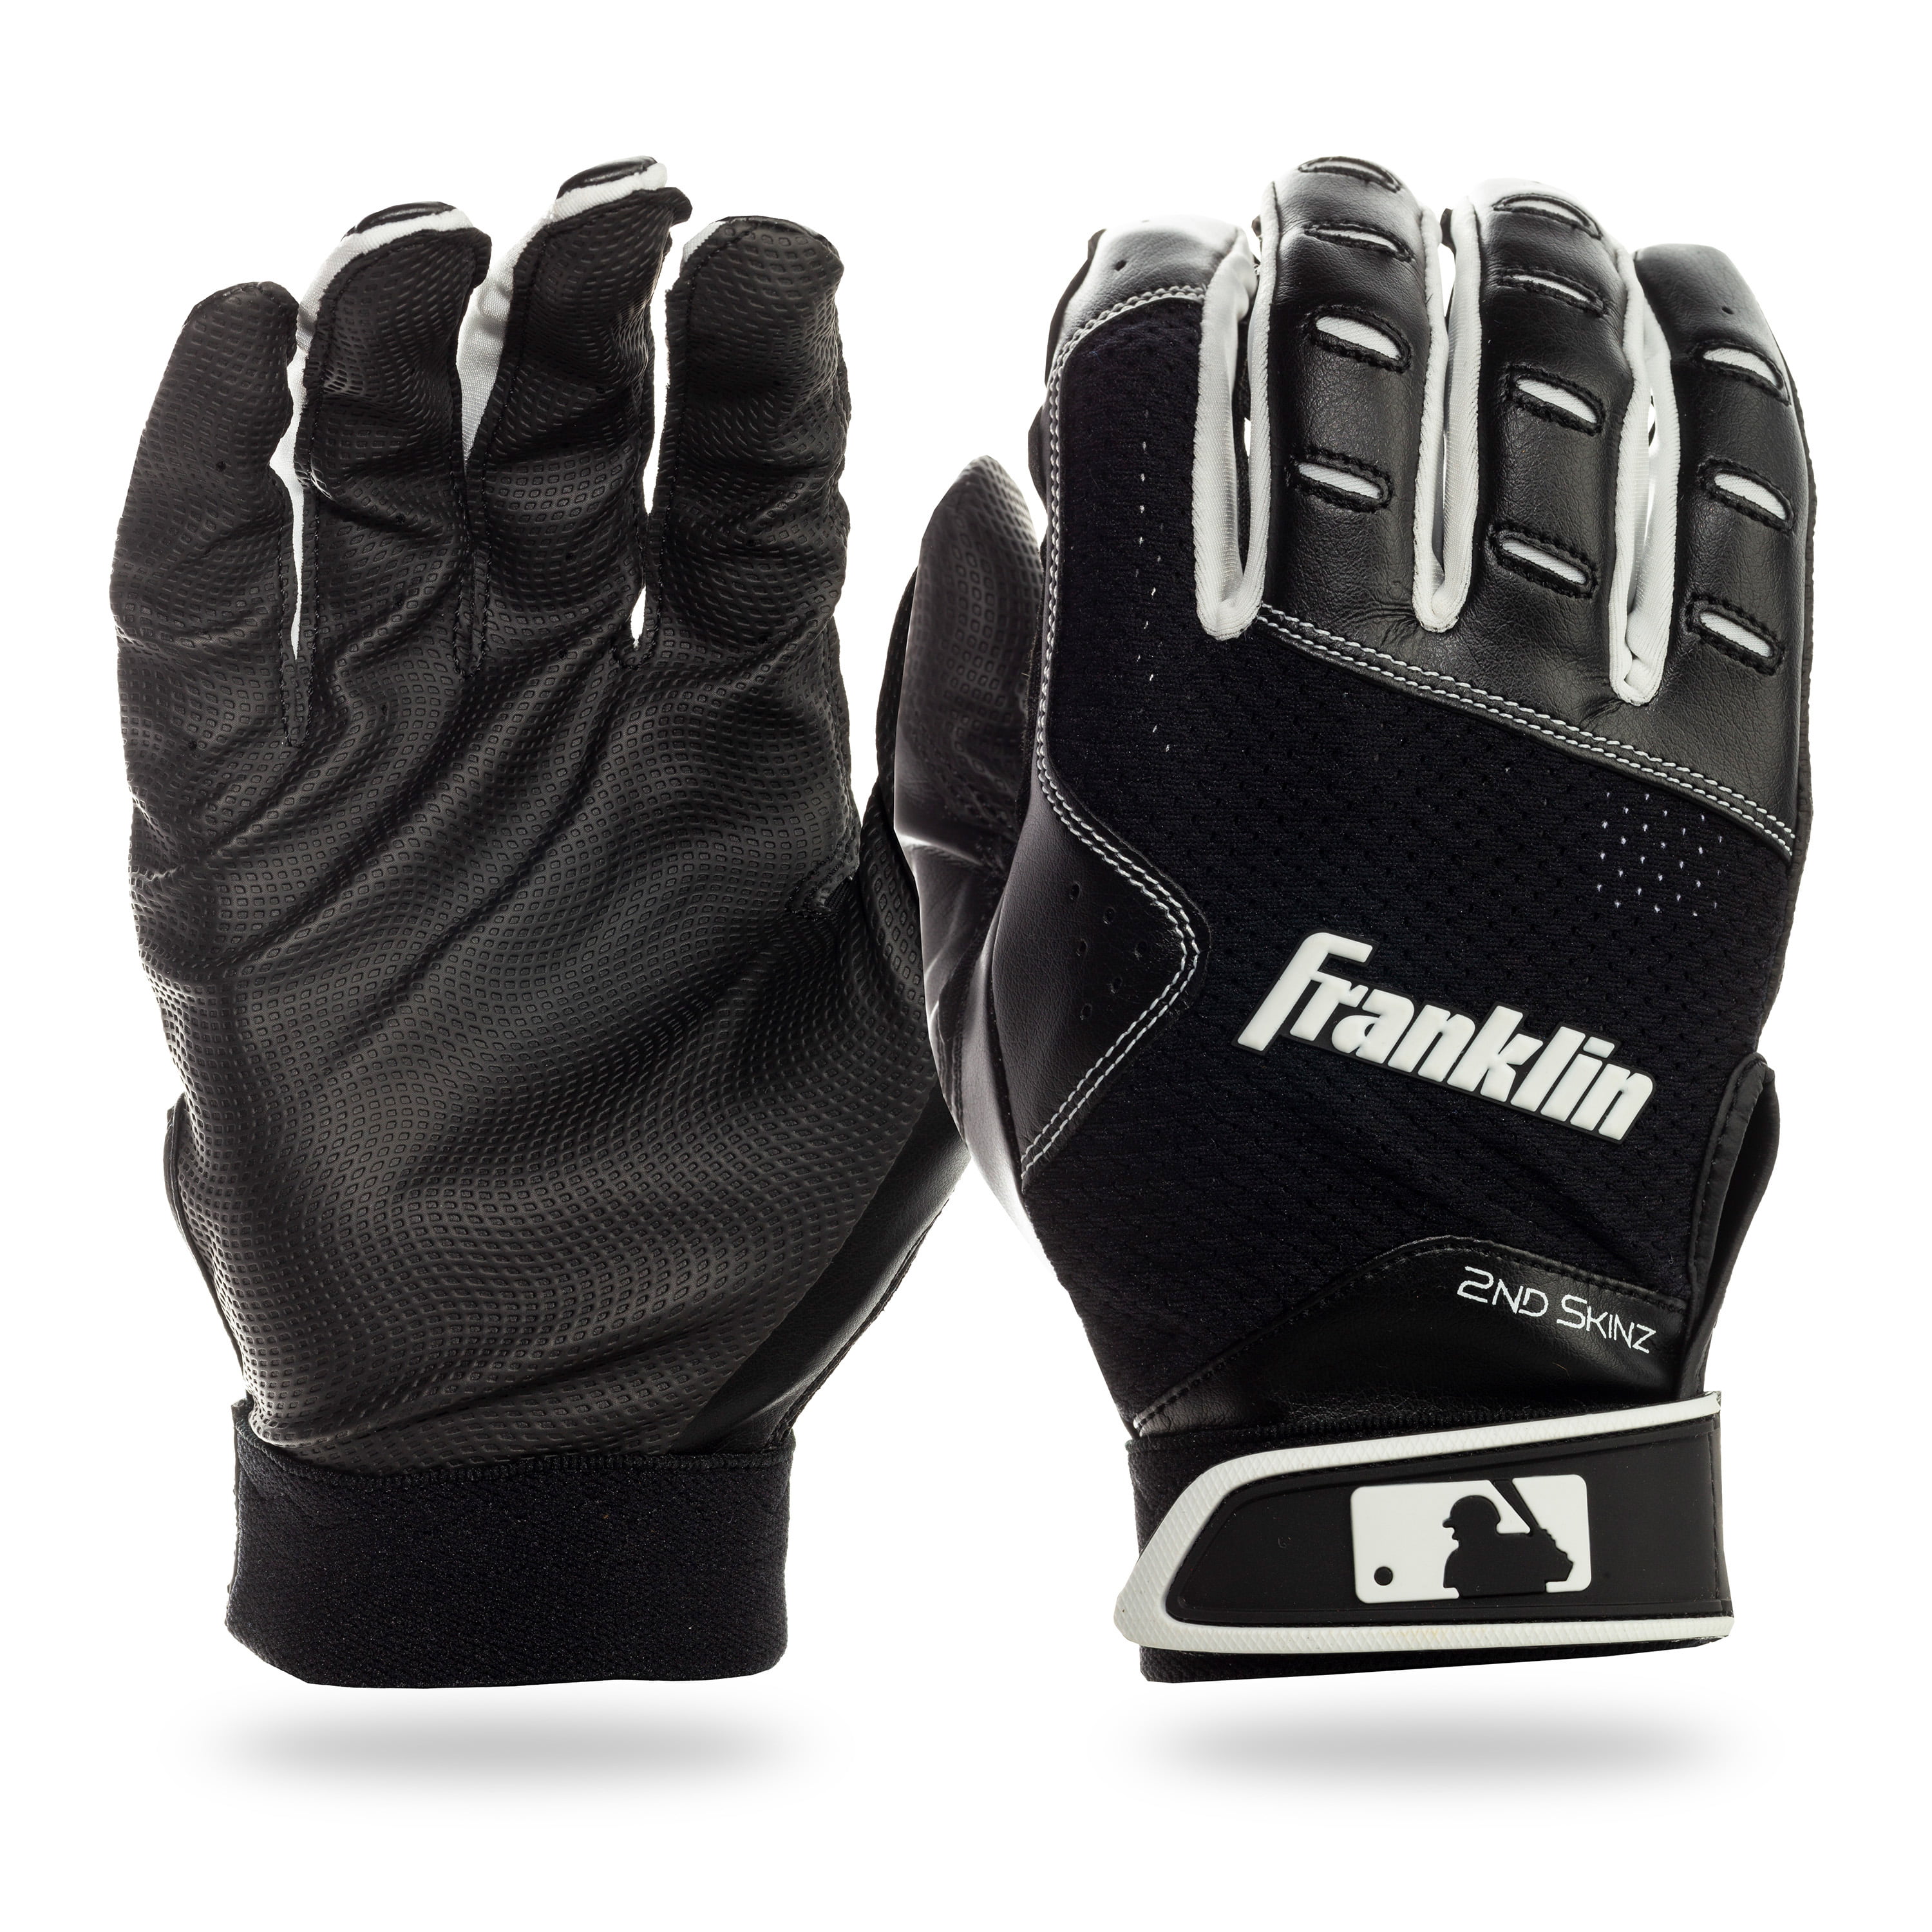 Franklin PRO CHARGER MENS Adult Leather Batting Gloves Size M Medium Black/White 